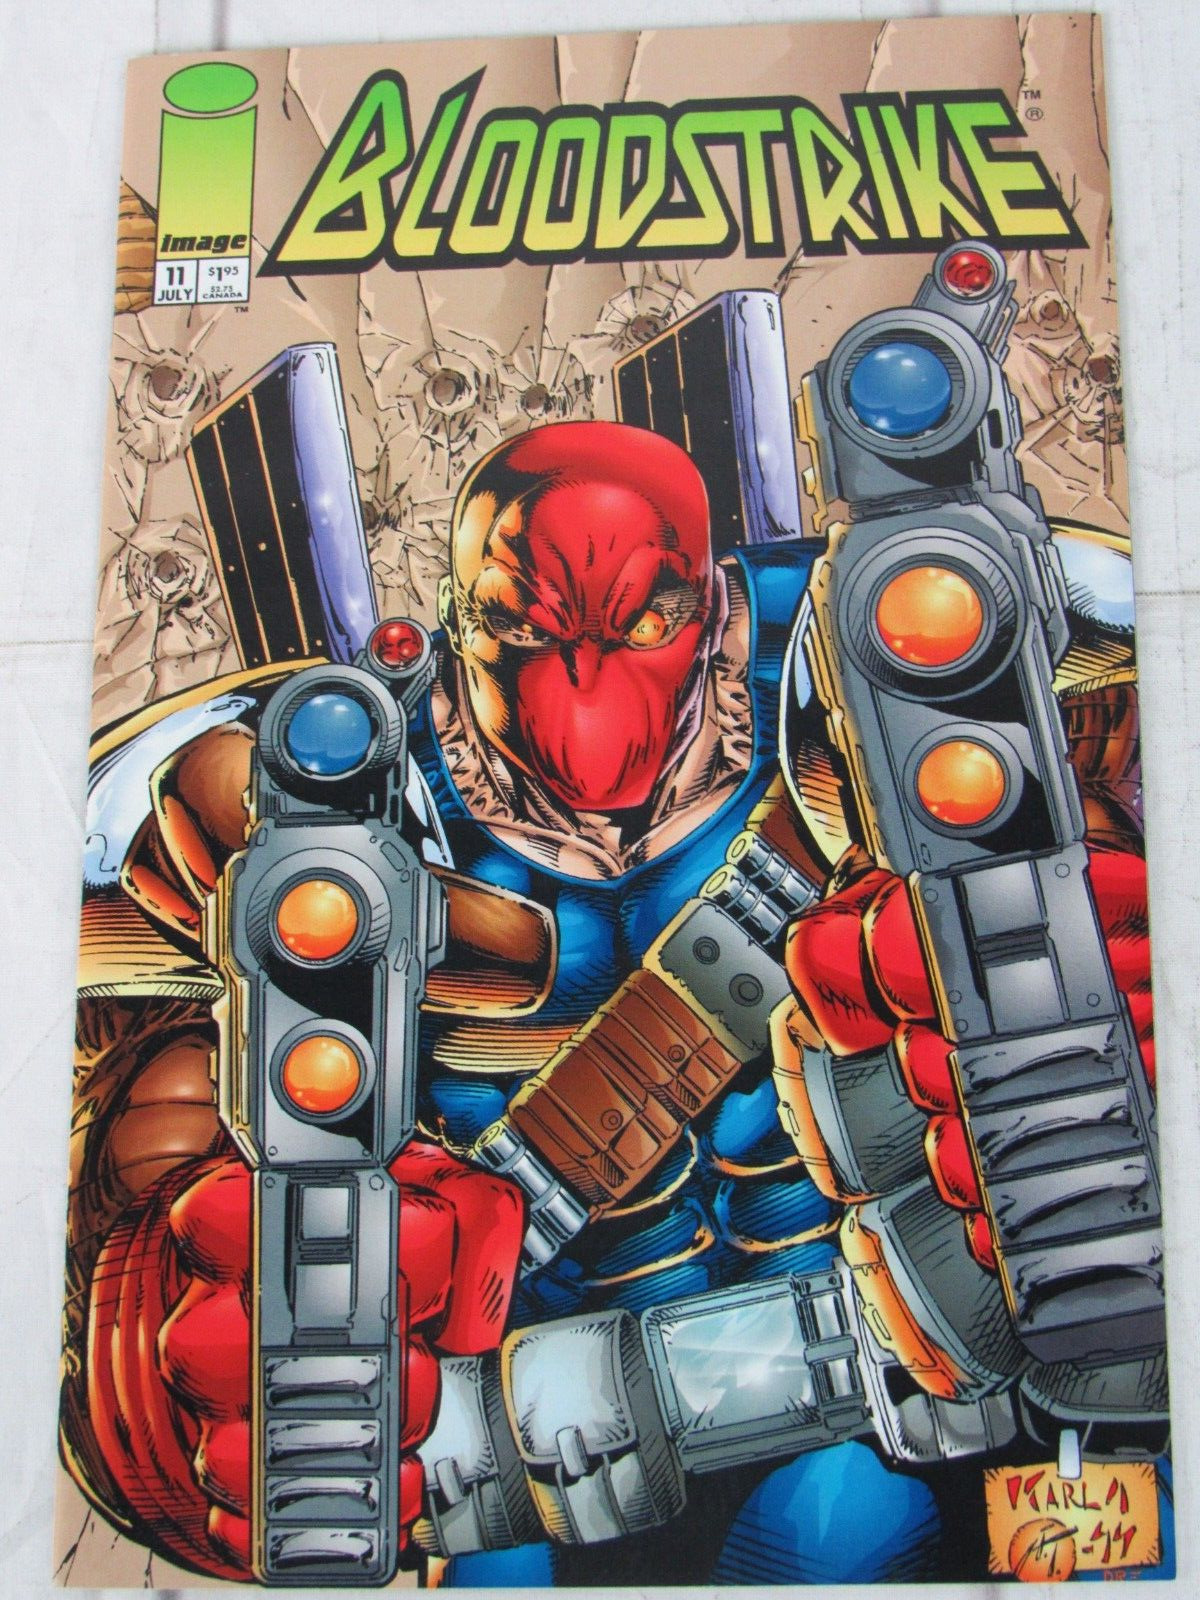 Bloodstrike #11 July 1994 Image Comics